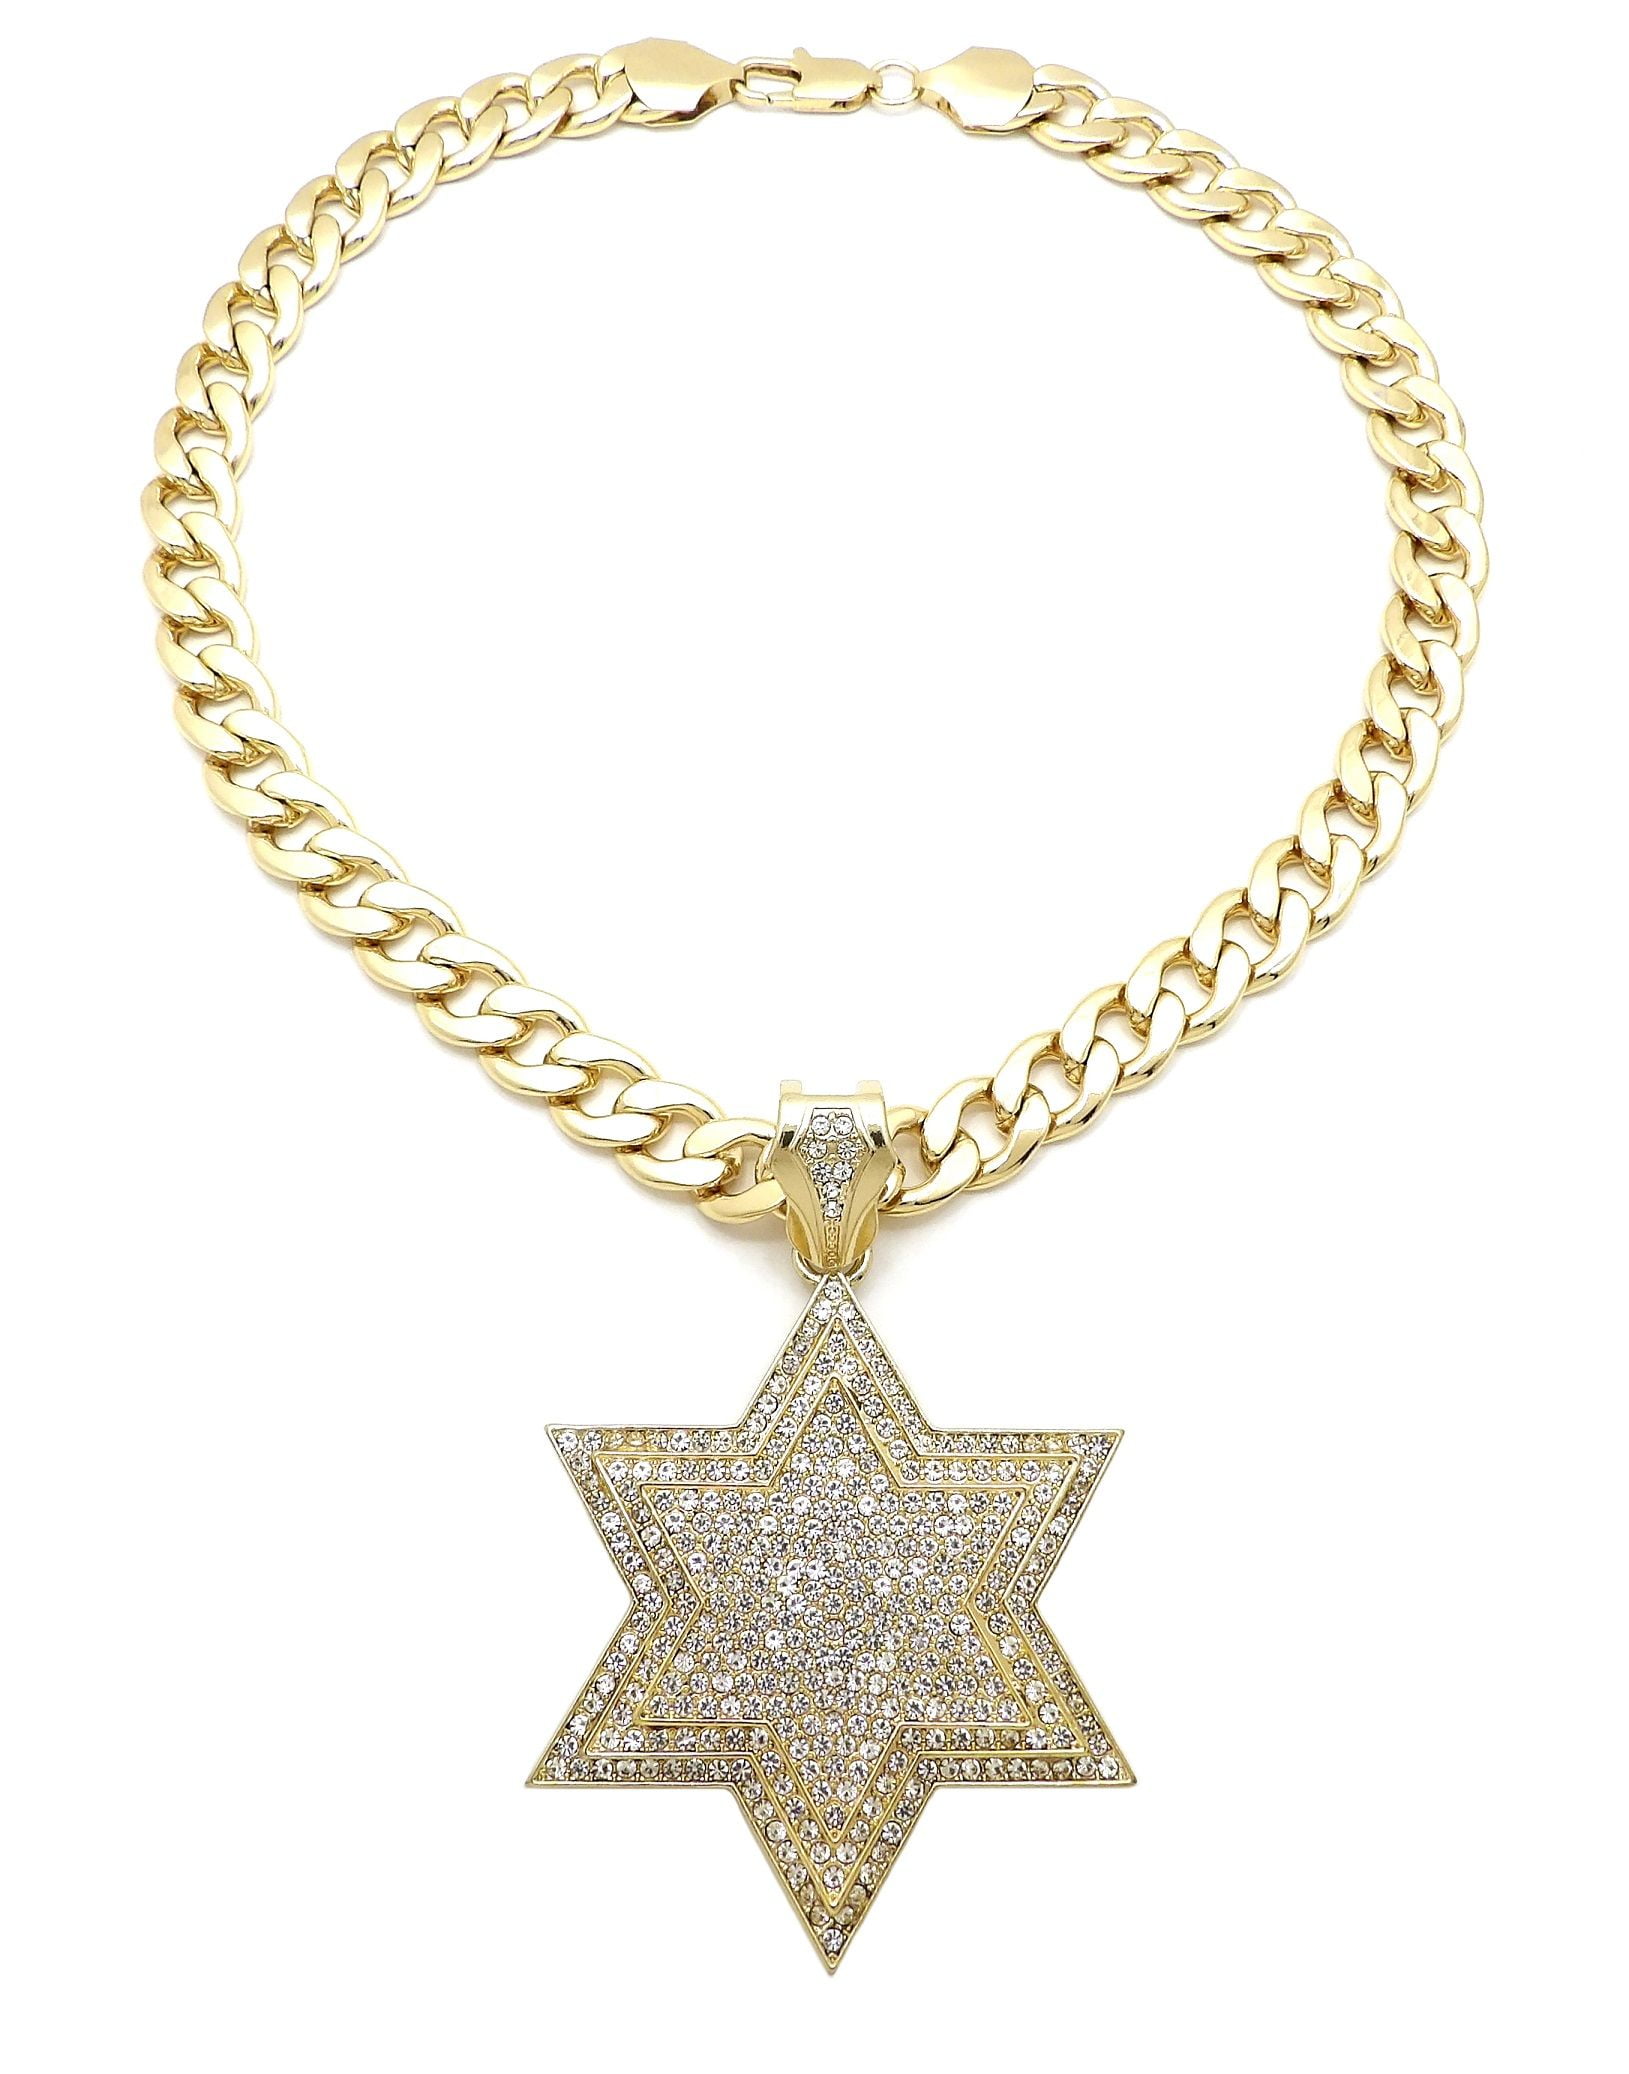 NYFASHION101 Stone Stud Layered Star Large Pendant for Necklace 